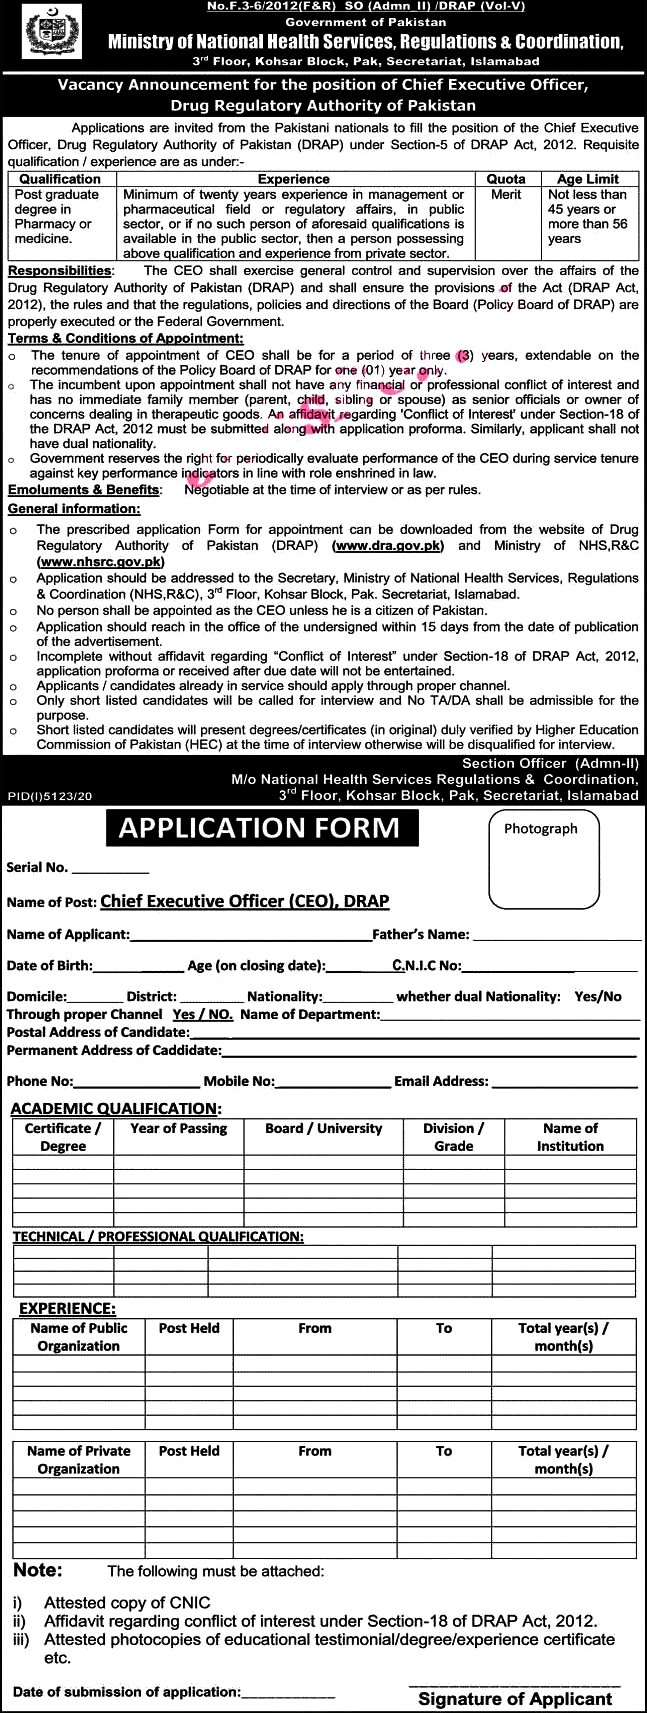 New Jobs in Drug Regulatory Authority Of Pakistan DRAP March 2021-Apply online